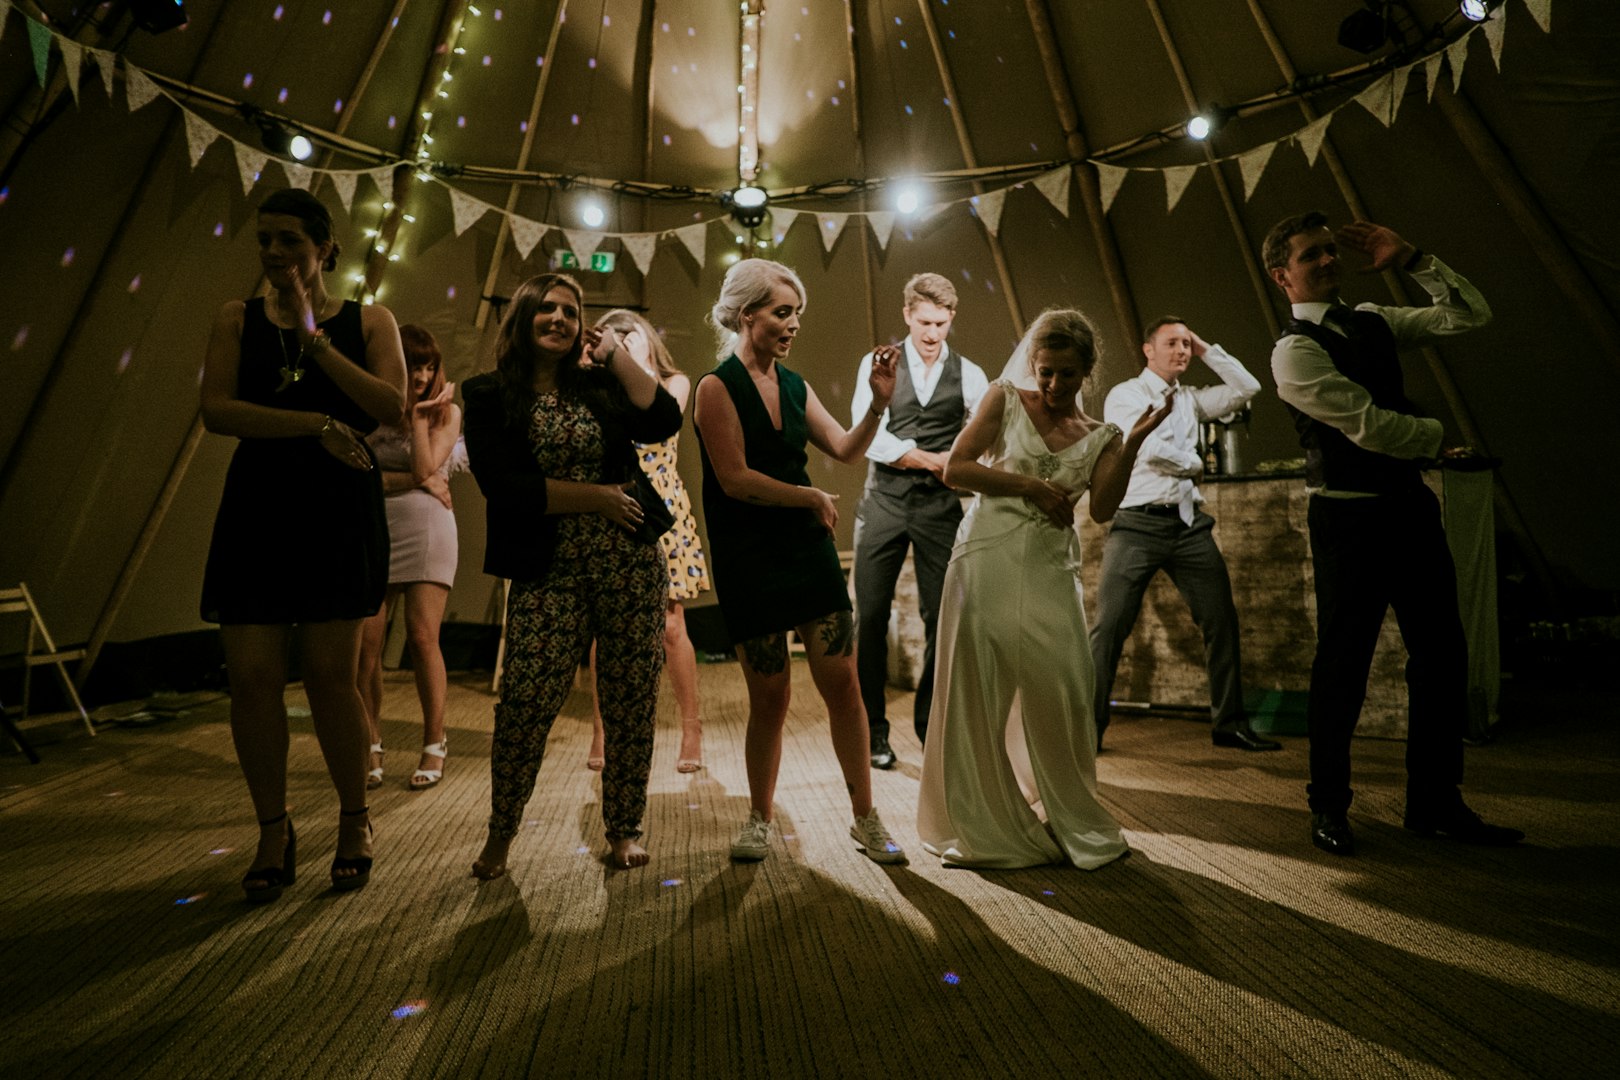 Guests Dancing at a Wedding